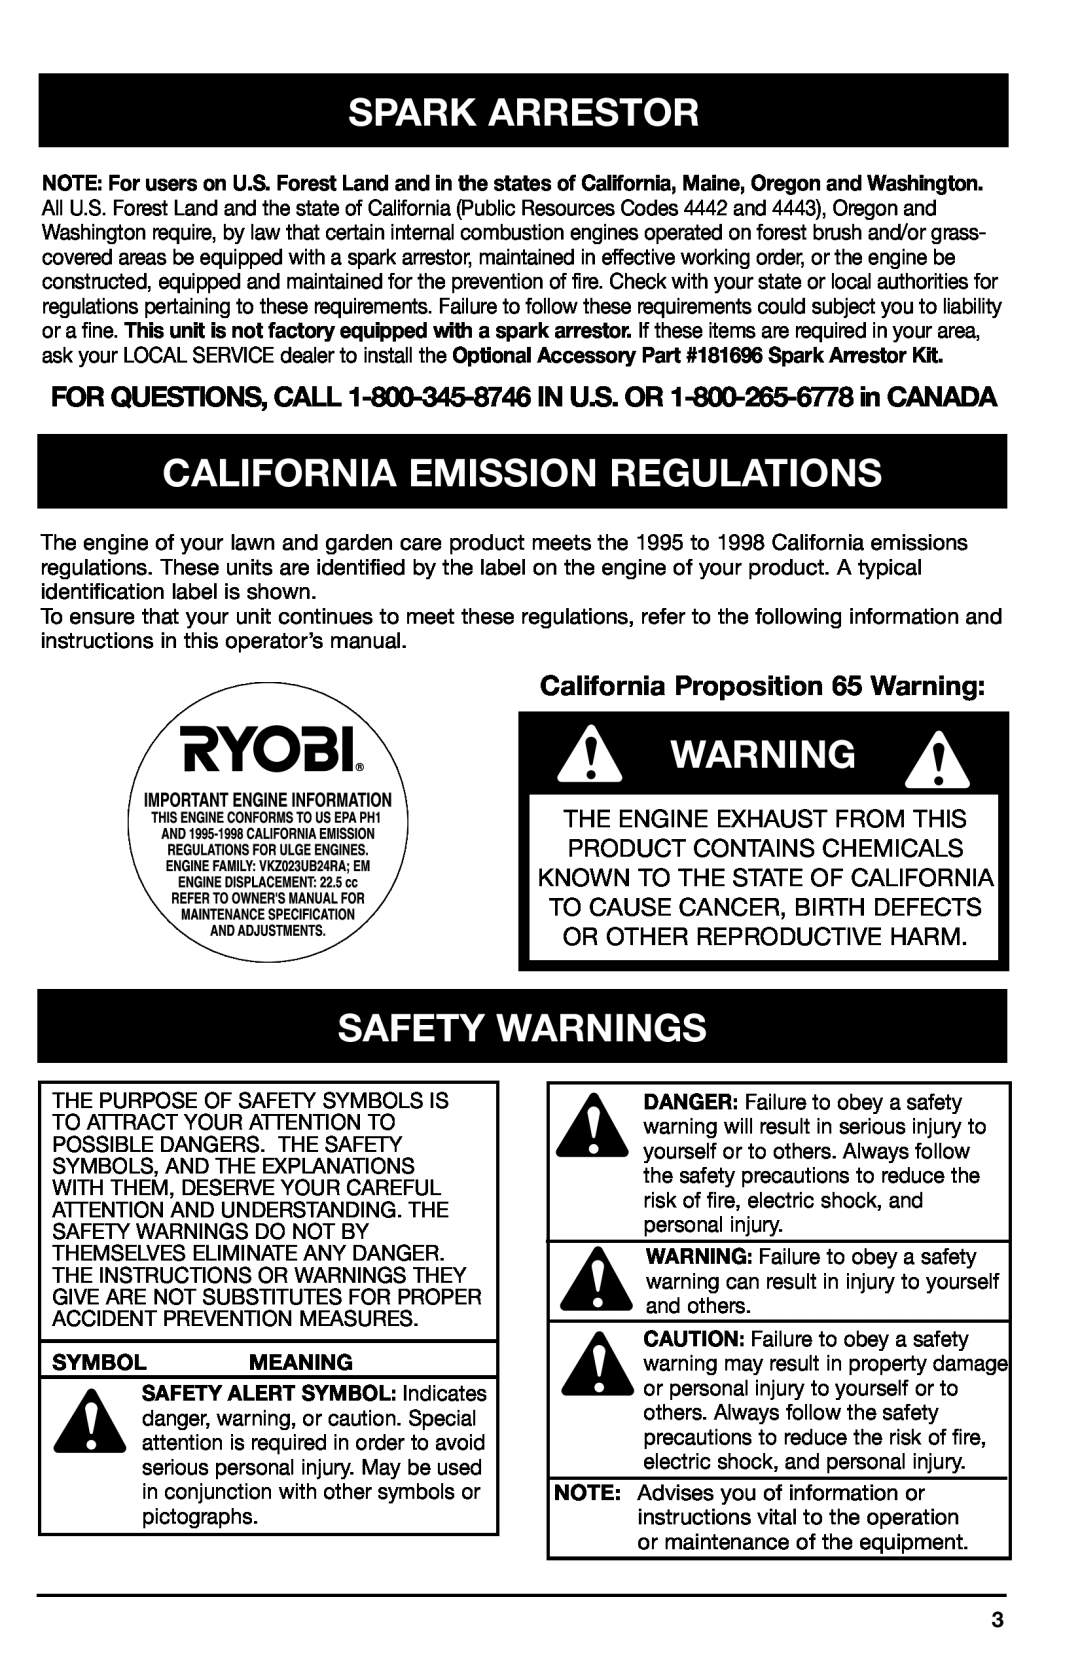 Ryobi 2075r manual Spark Arrestor, California Emission Regulations, Safety Warnings, California Proposition 65 Warning 